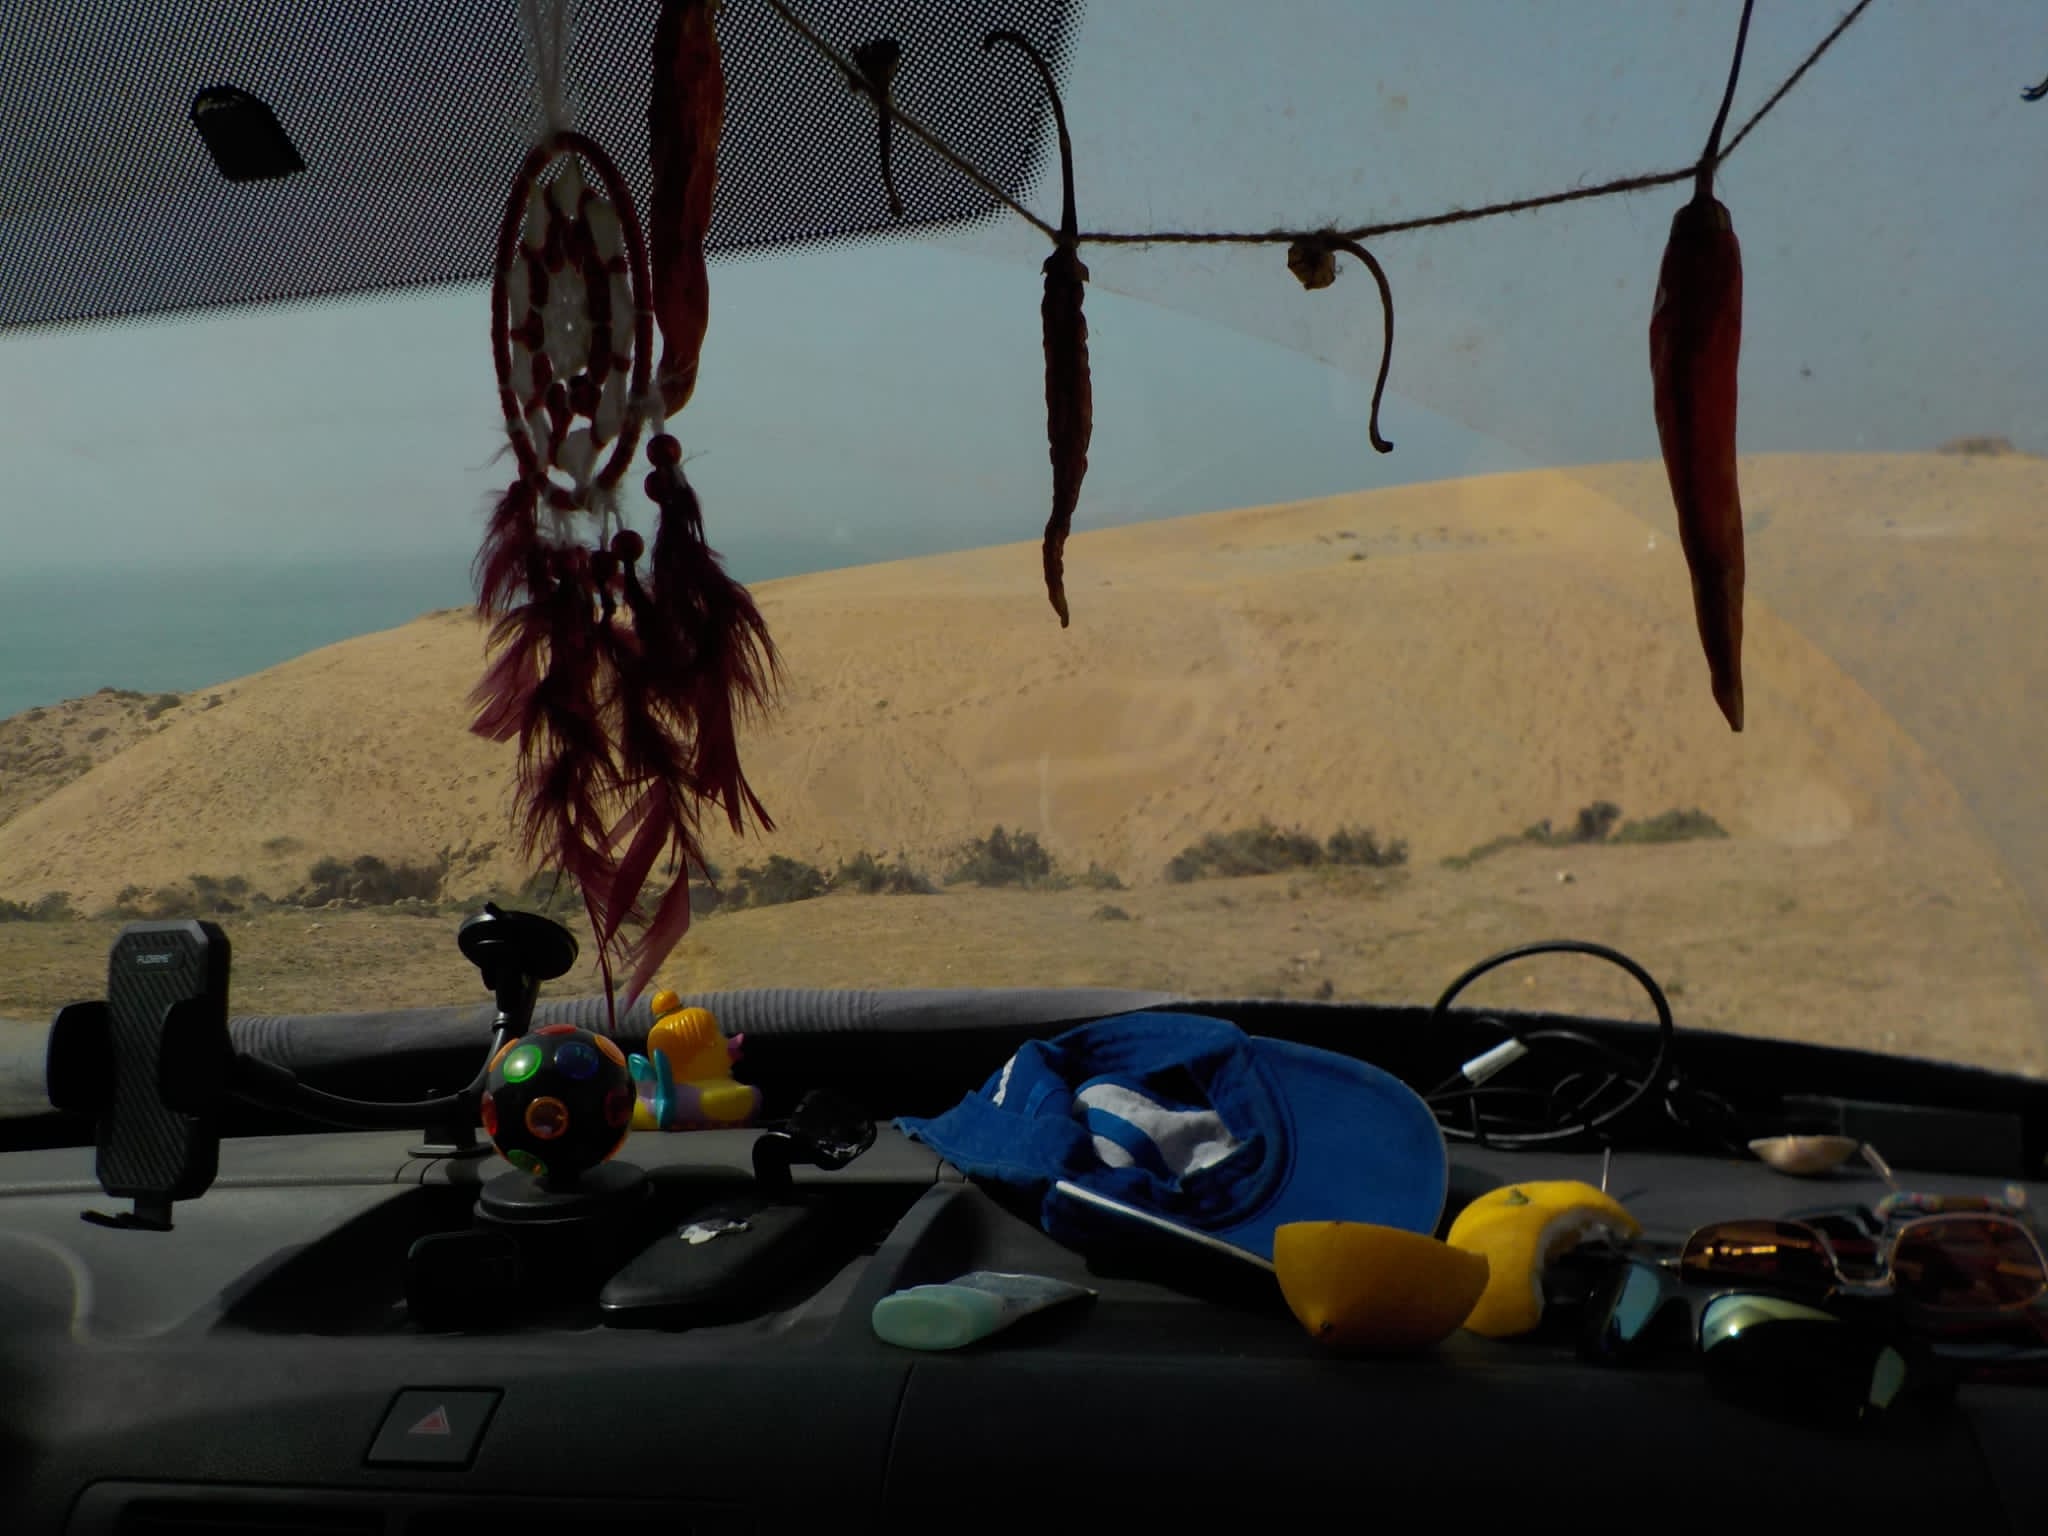 Driving through the Sahara